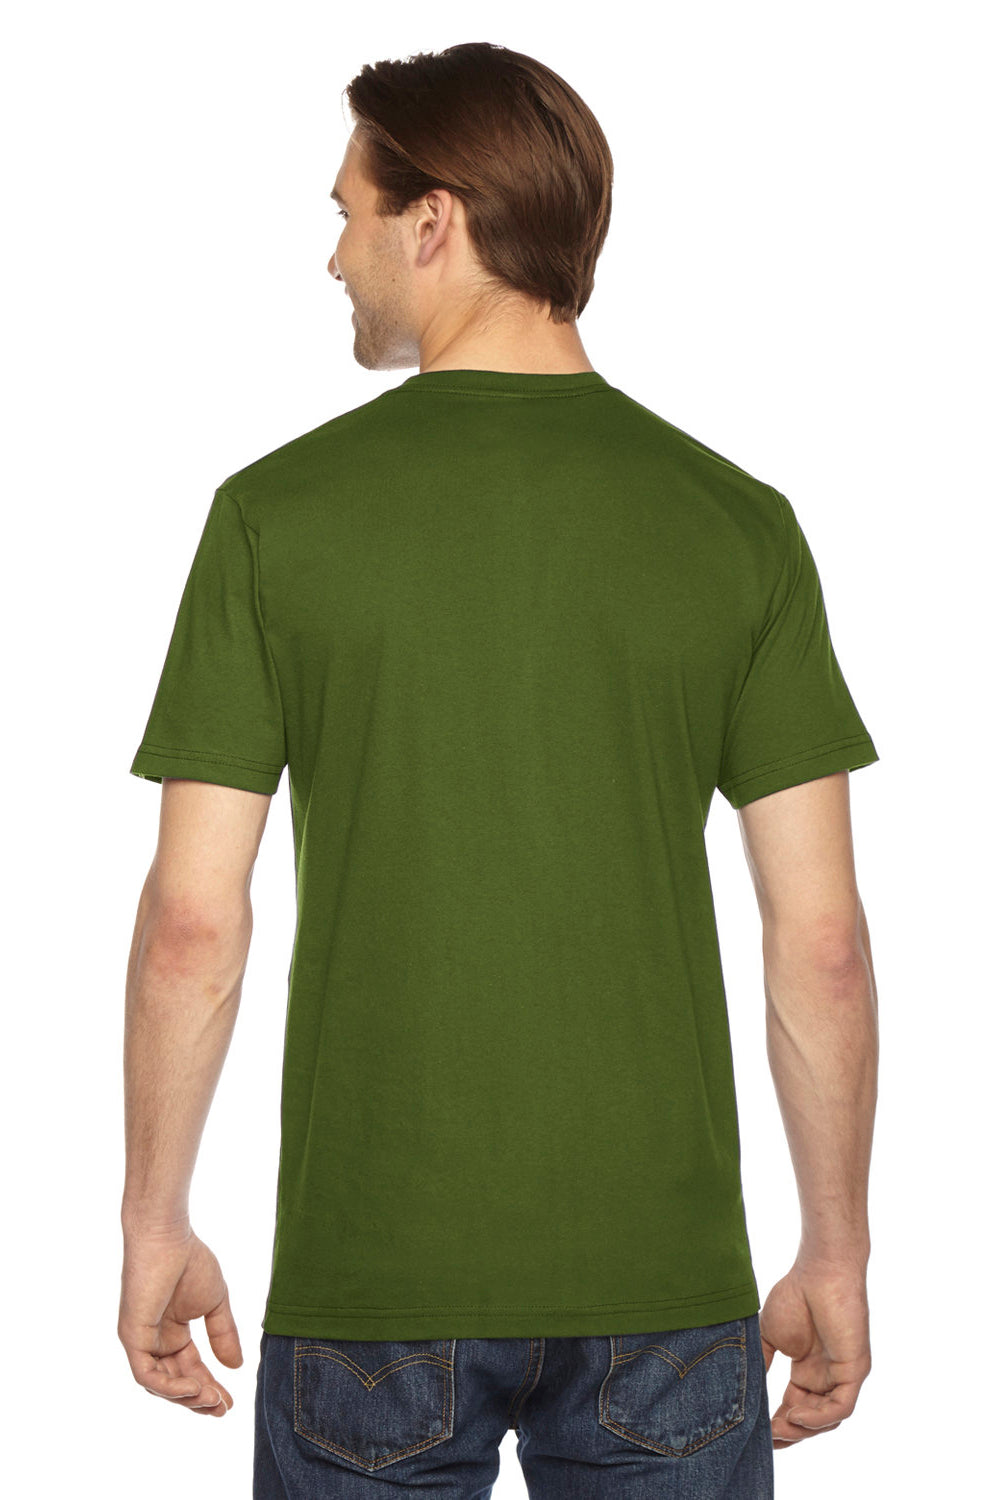 American Apparel 2001 Mens Fine Jersey Short Sleeve Crewneck T-Shirt Olive Green Model Back